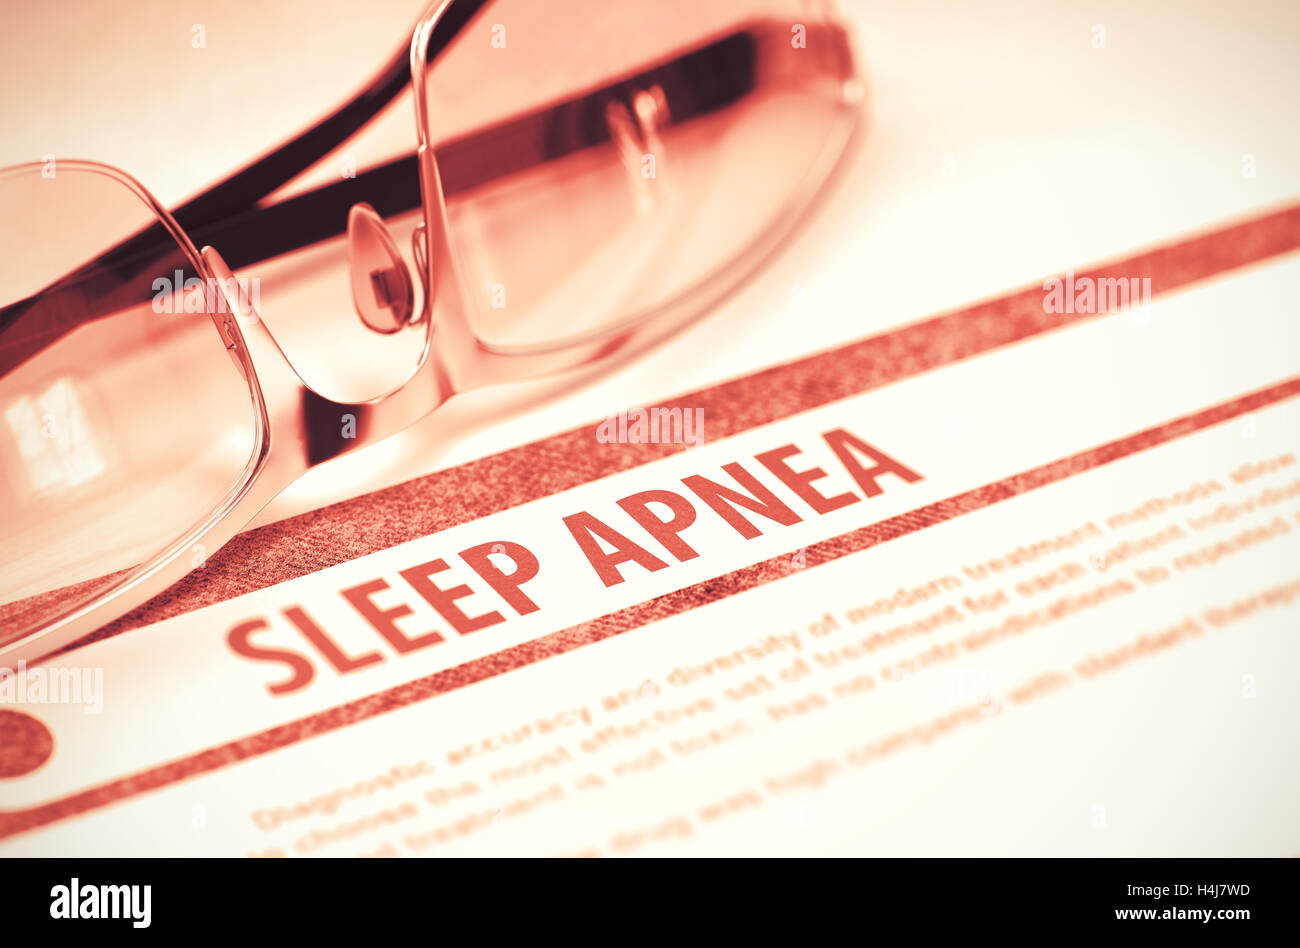 Sleep Apnea. Medicine. 3D Illustration. Stock Photo